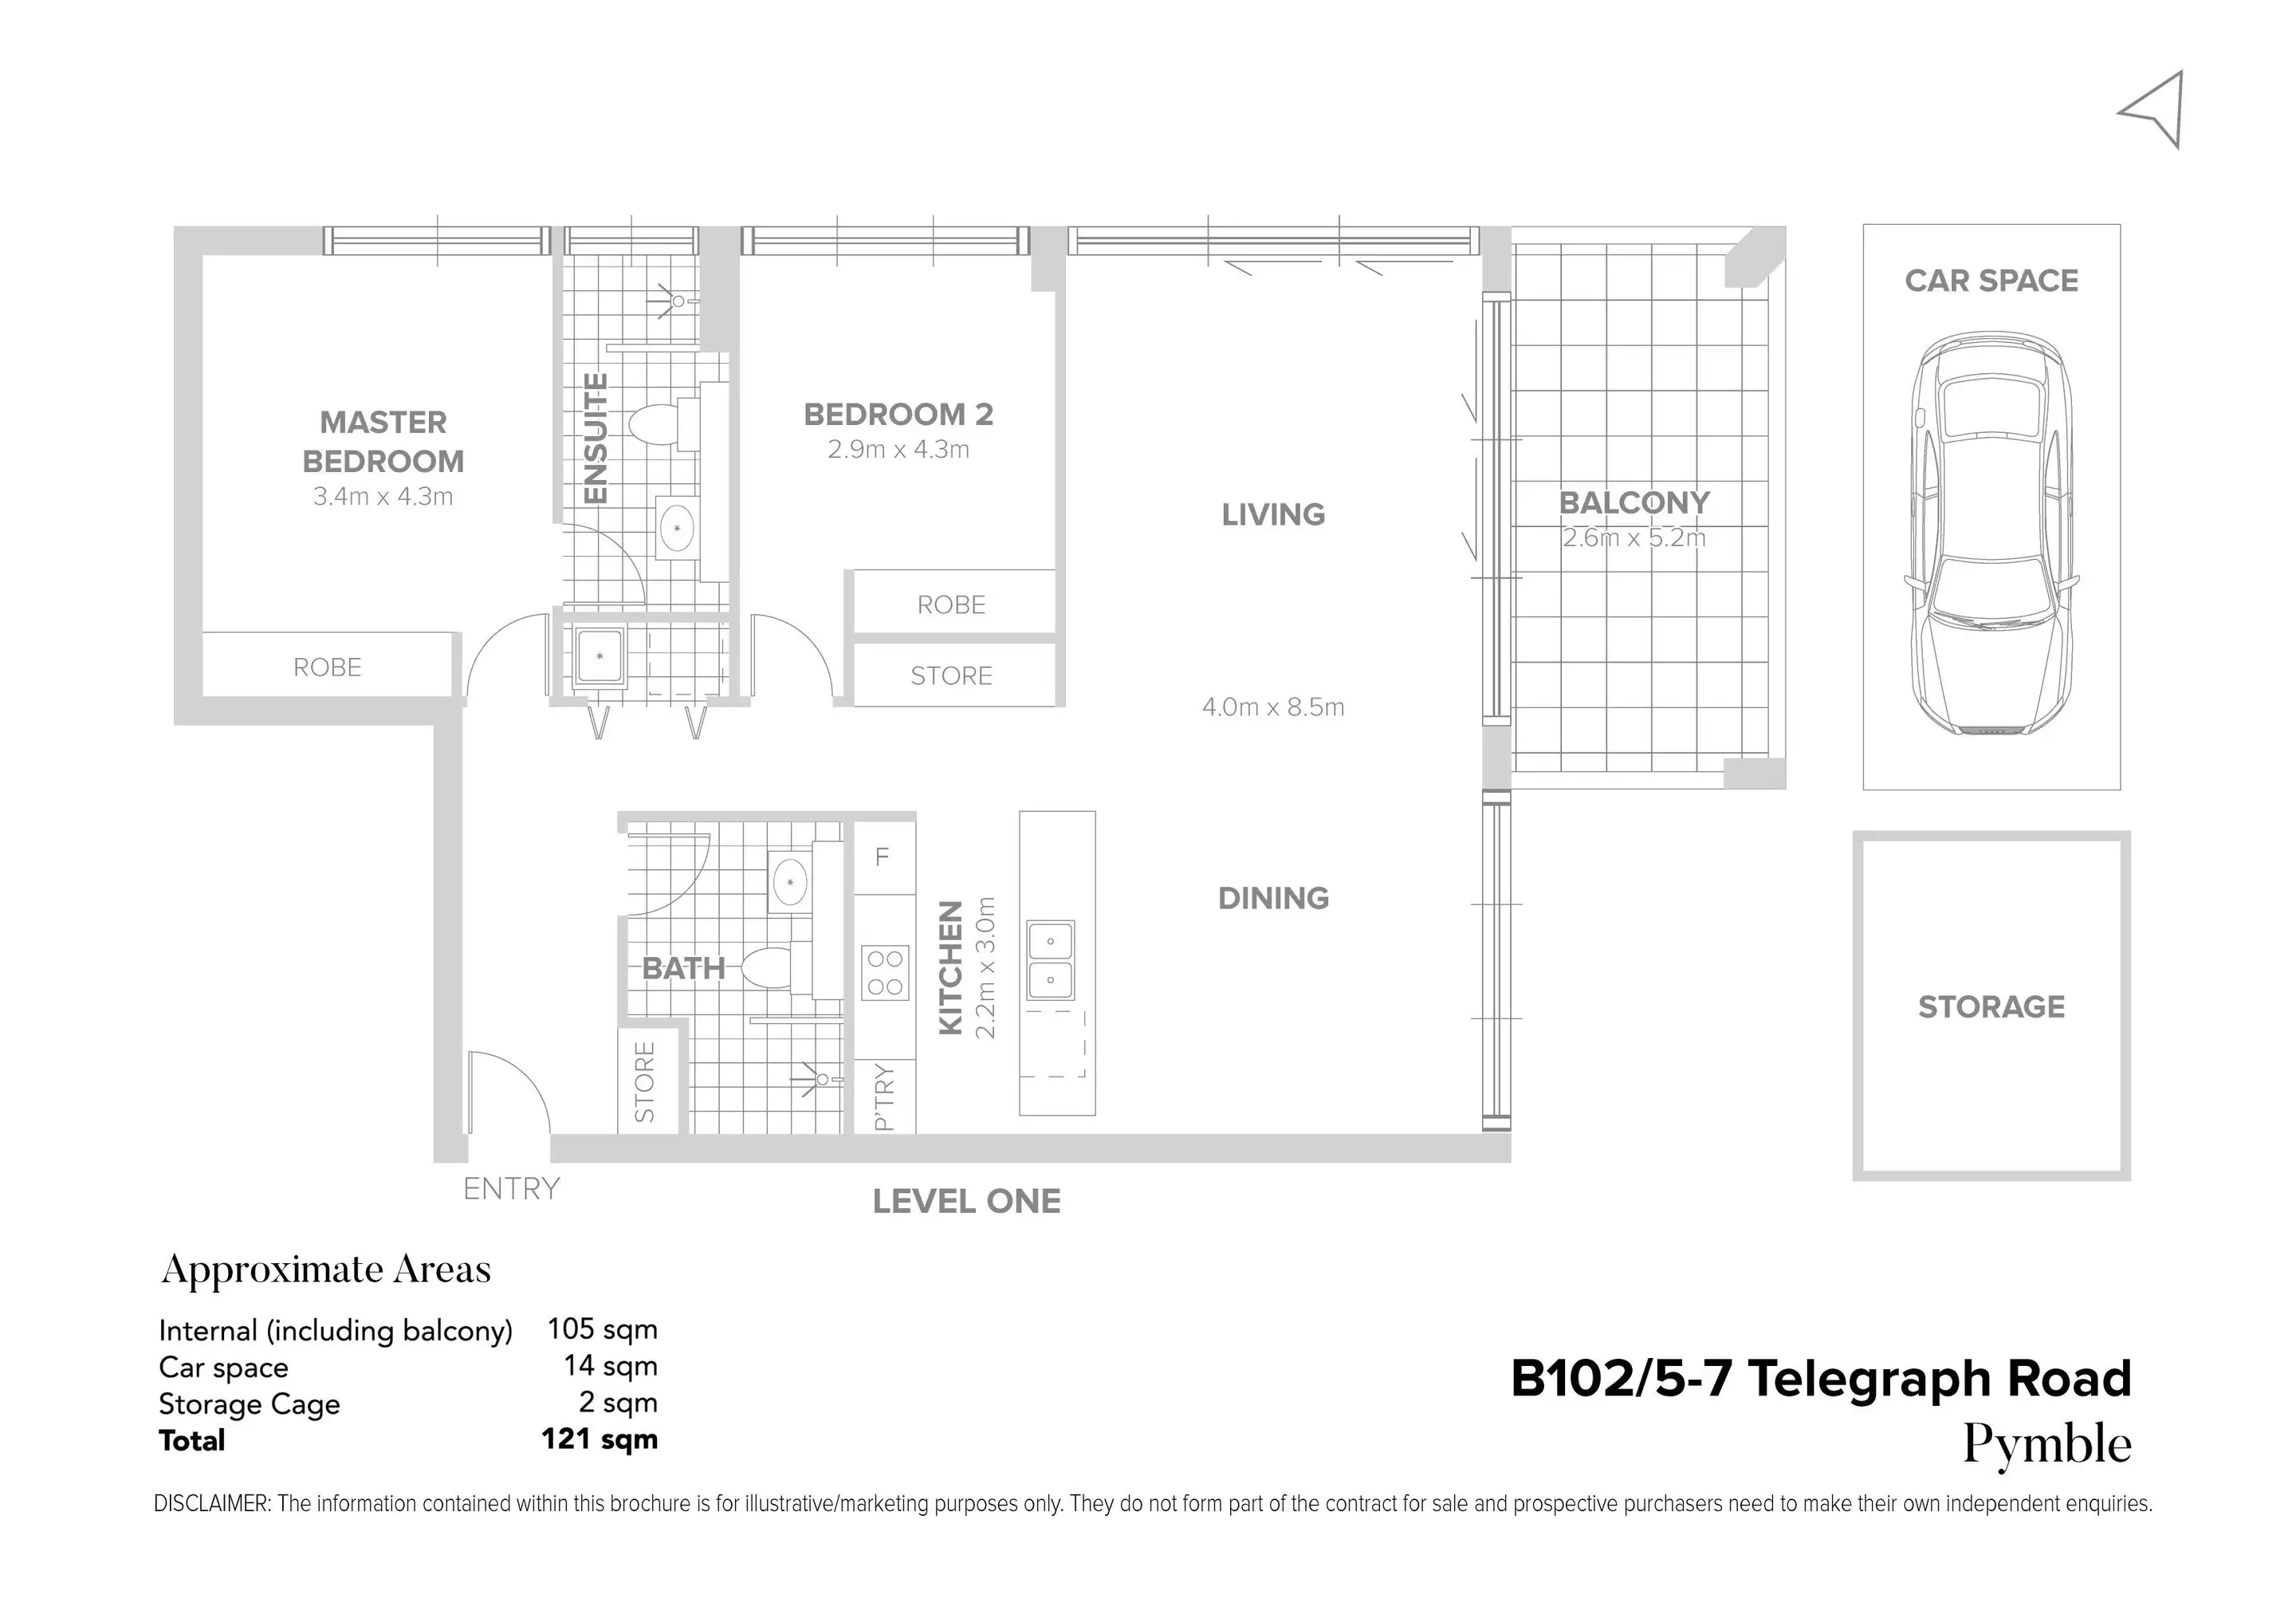 B102/5-7 Telegraph Road, Pymble Sold by Chidiac Realty - floorplan